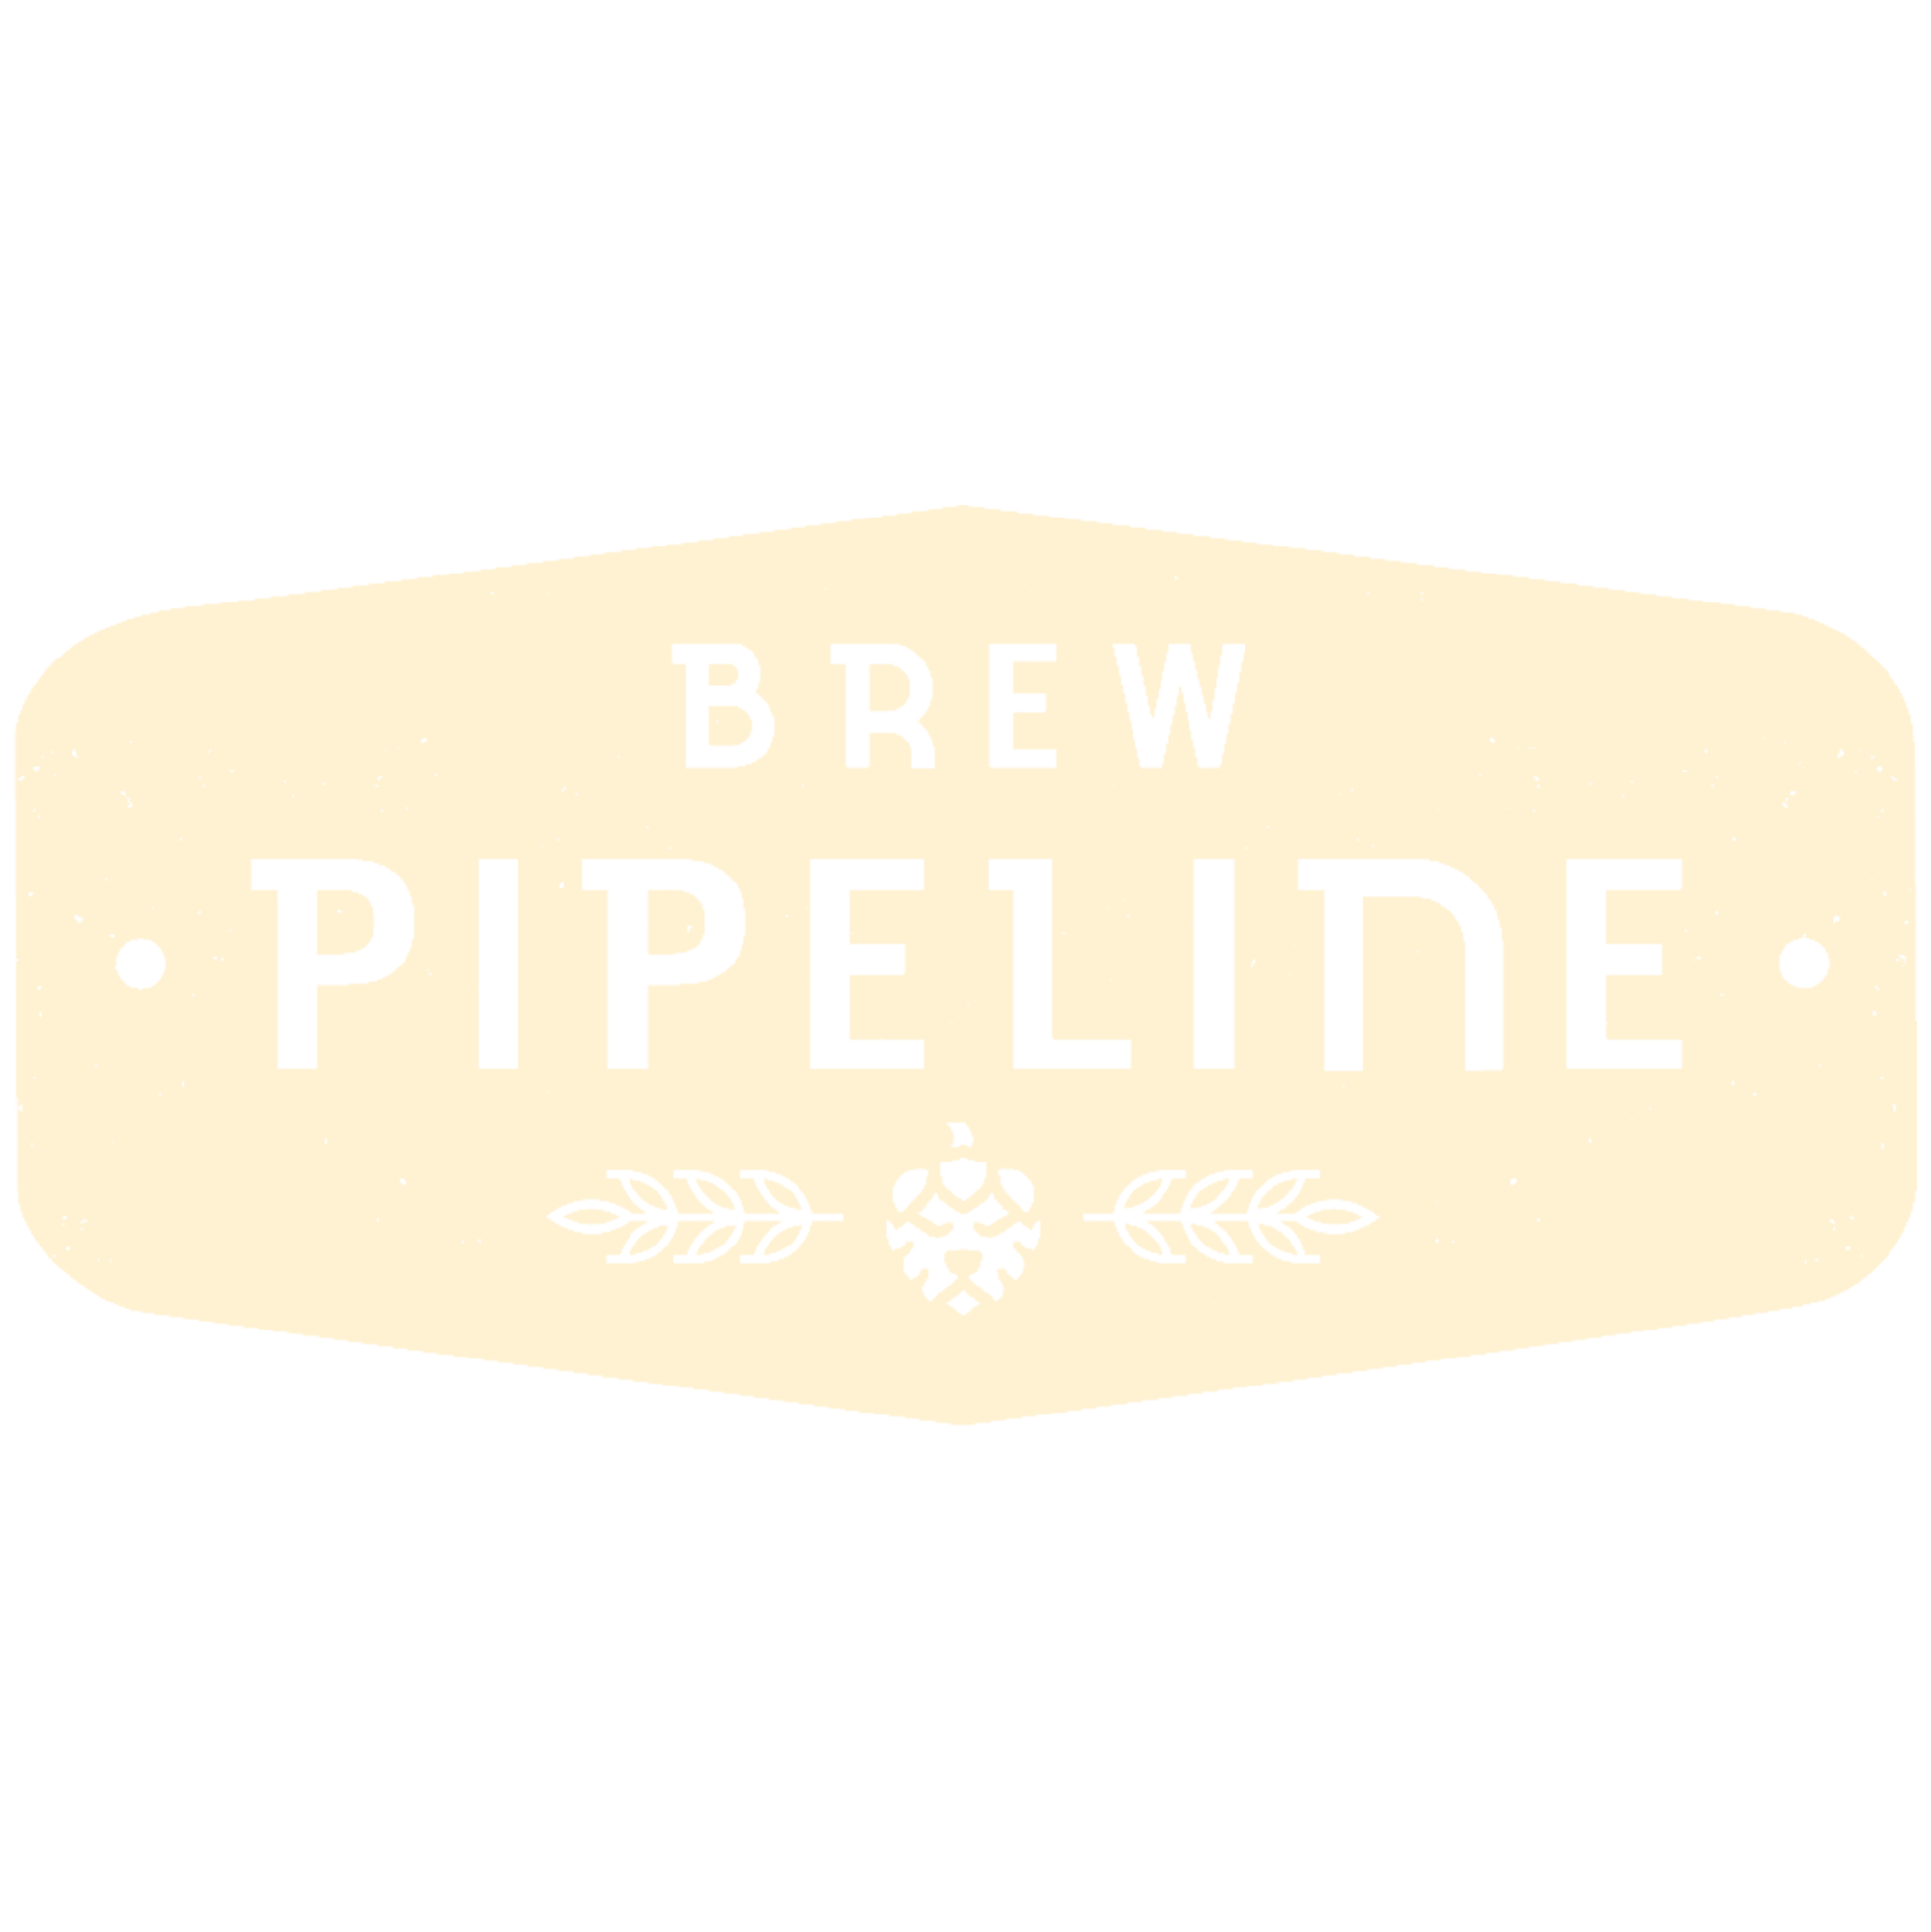 Brew Pipeline logo tan